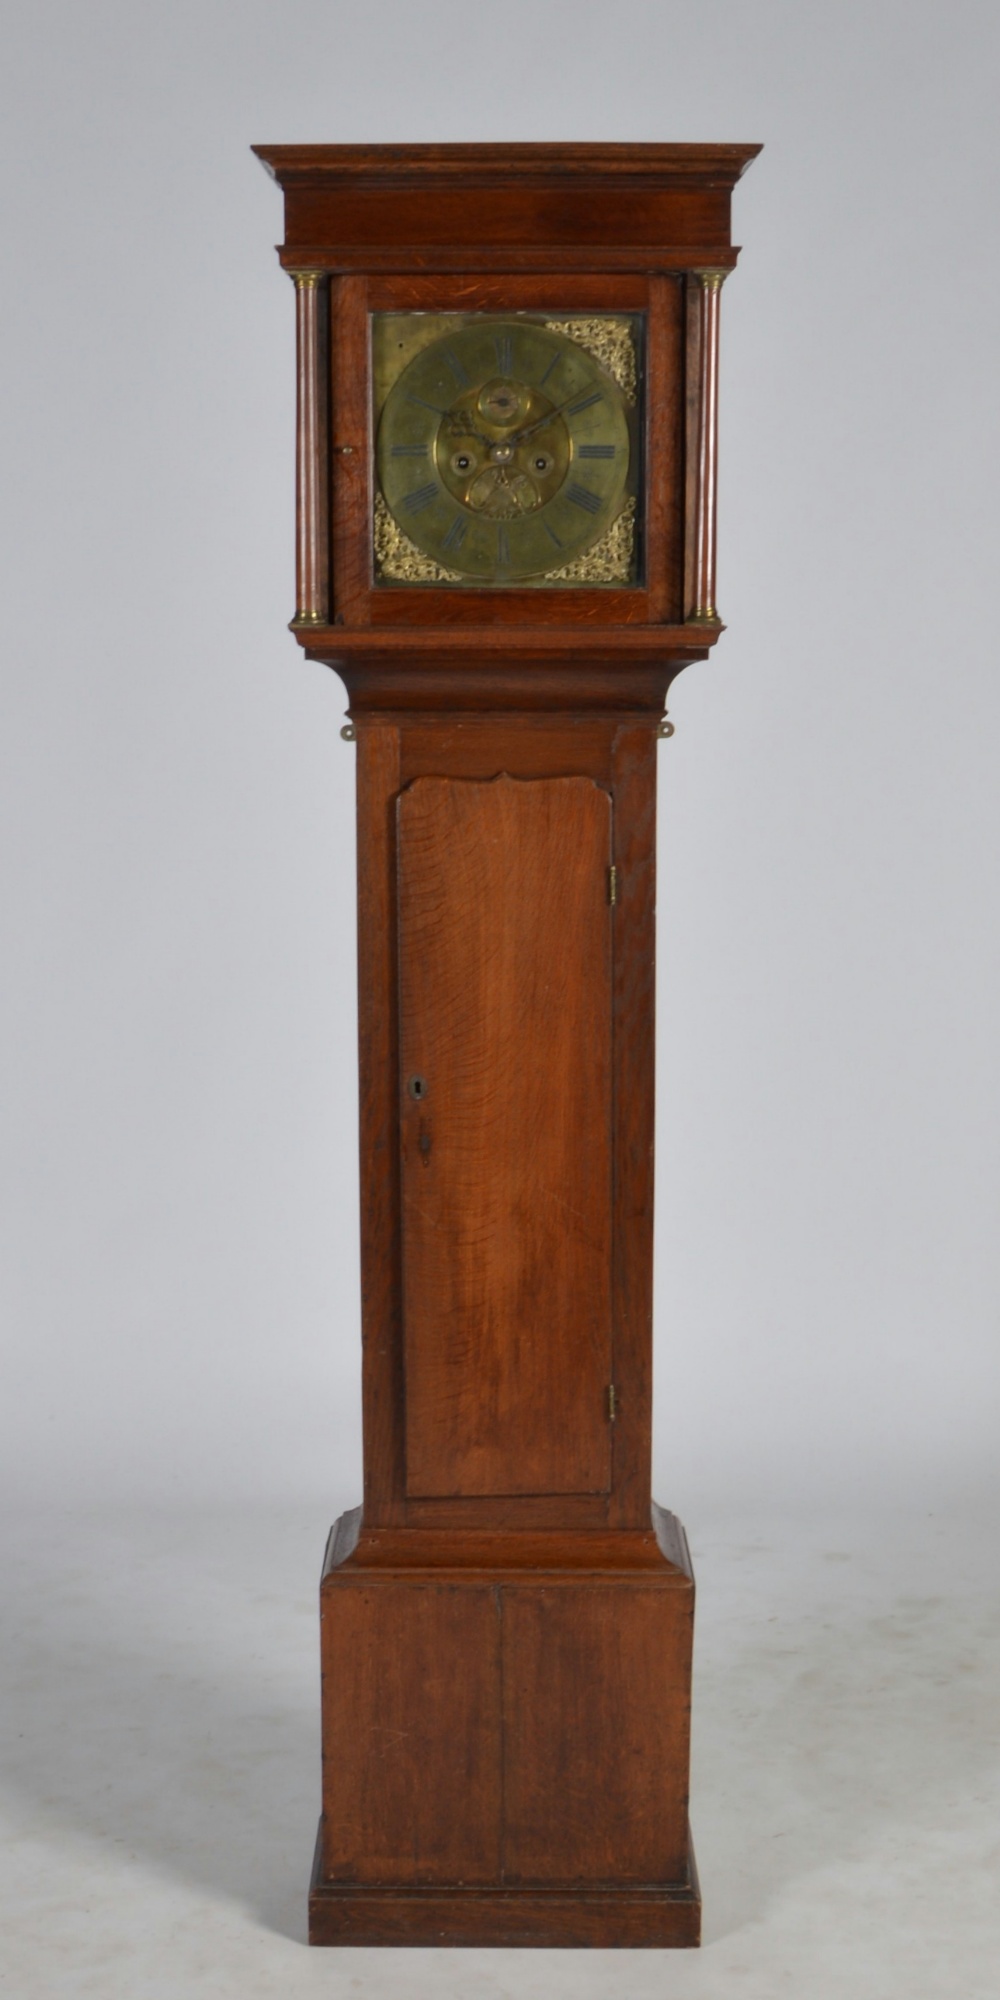 An 18th century oak longcase clock, Robt. Williamson, London, the 11" square dial with circular